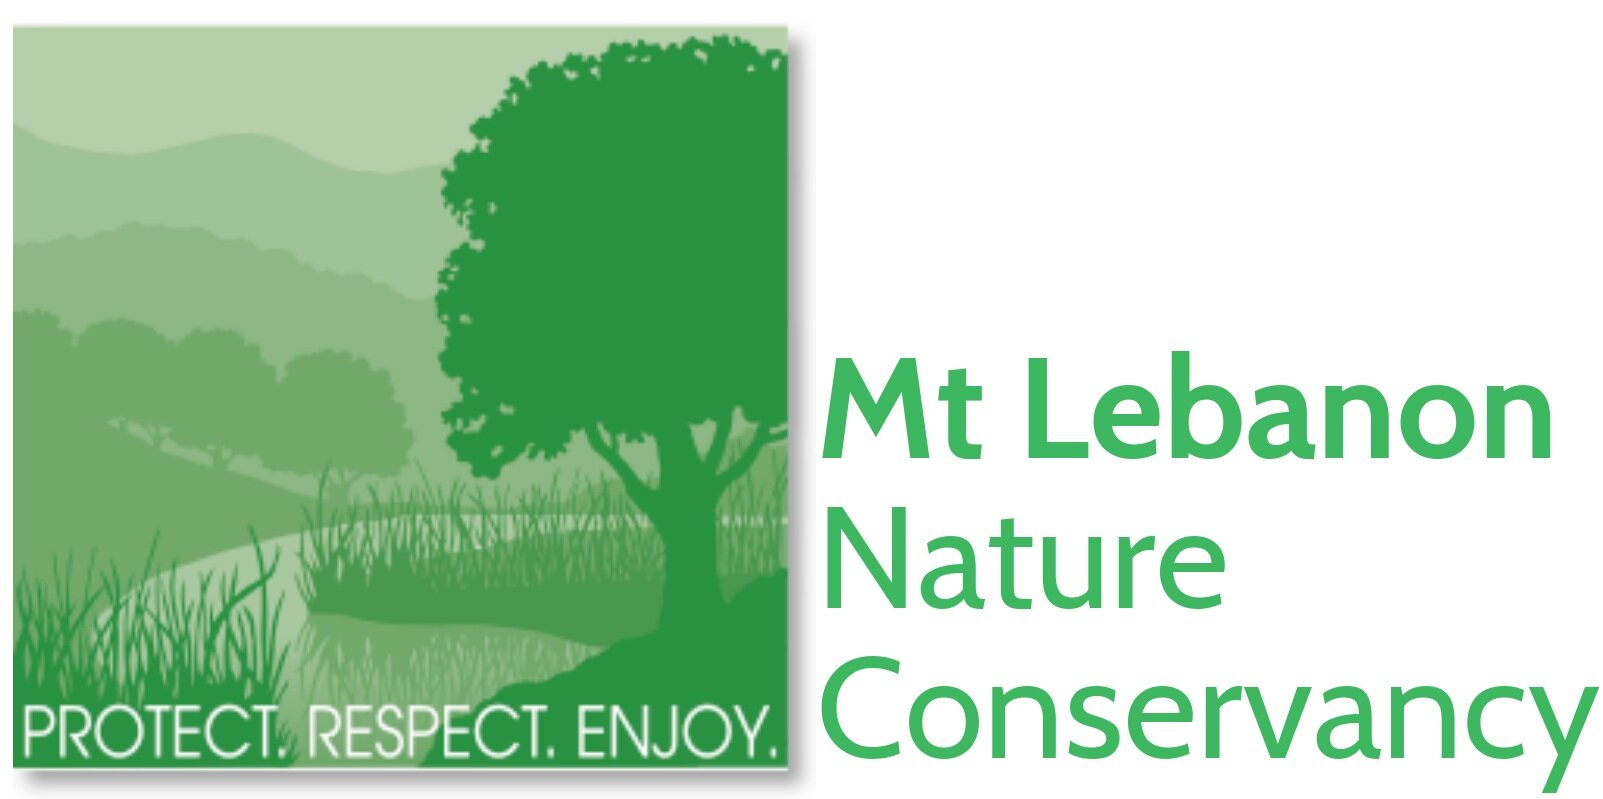 Mount Lebanon Nature Conservancy